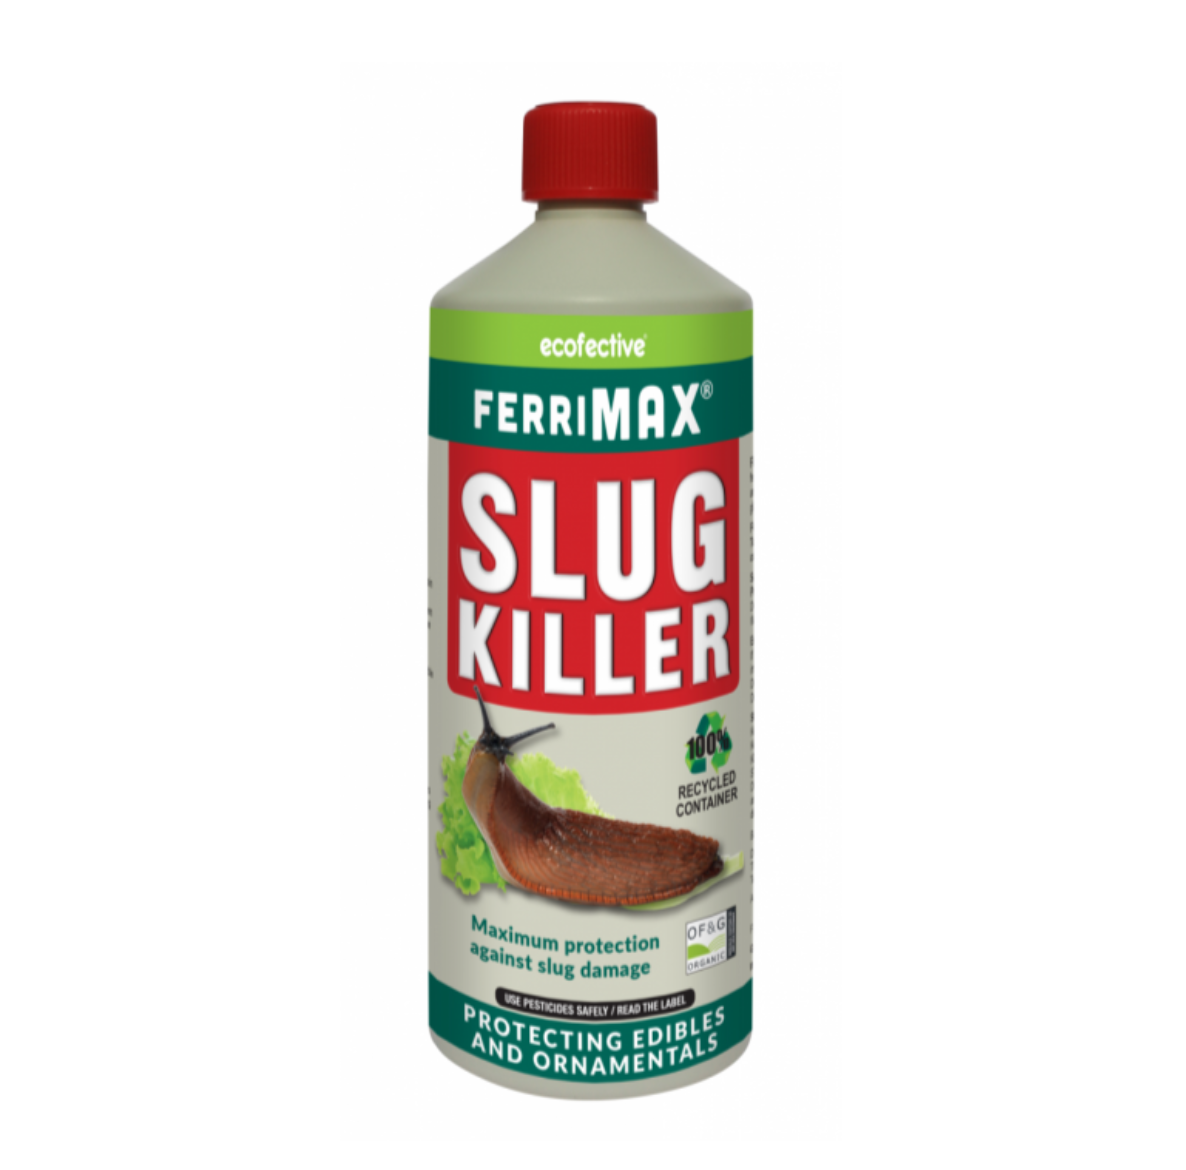 Slug and Snail Control Products